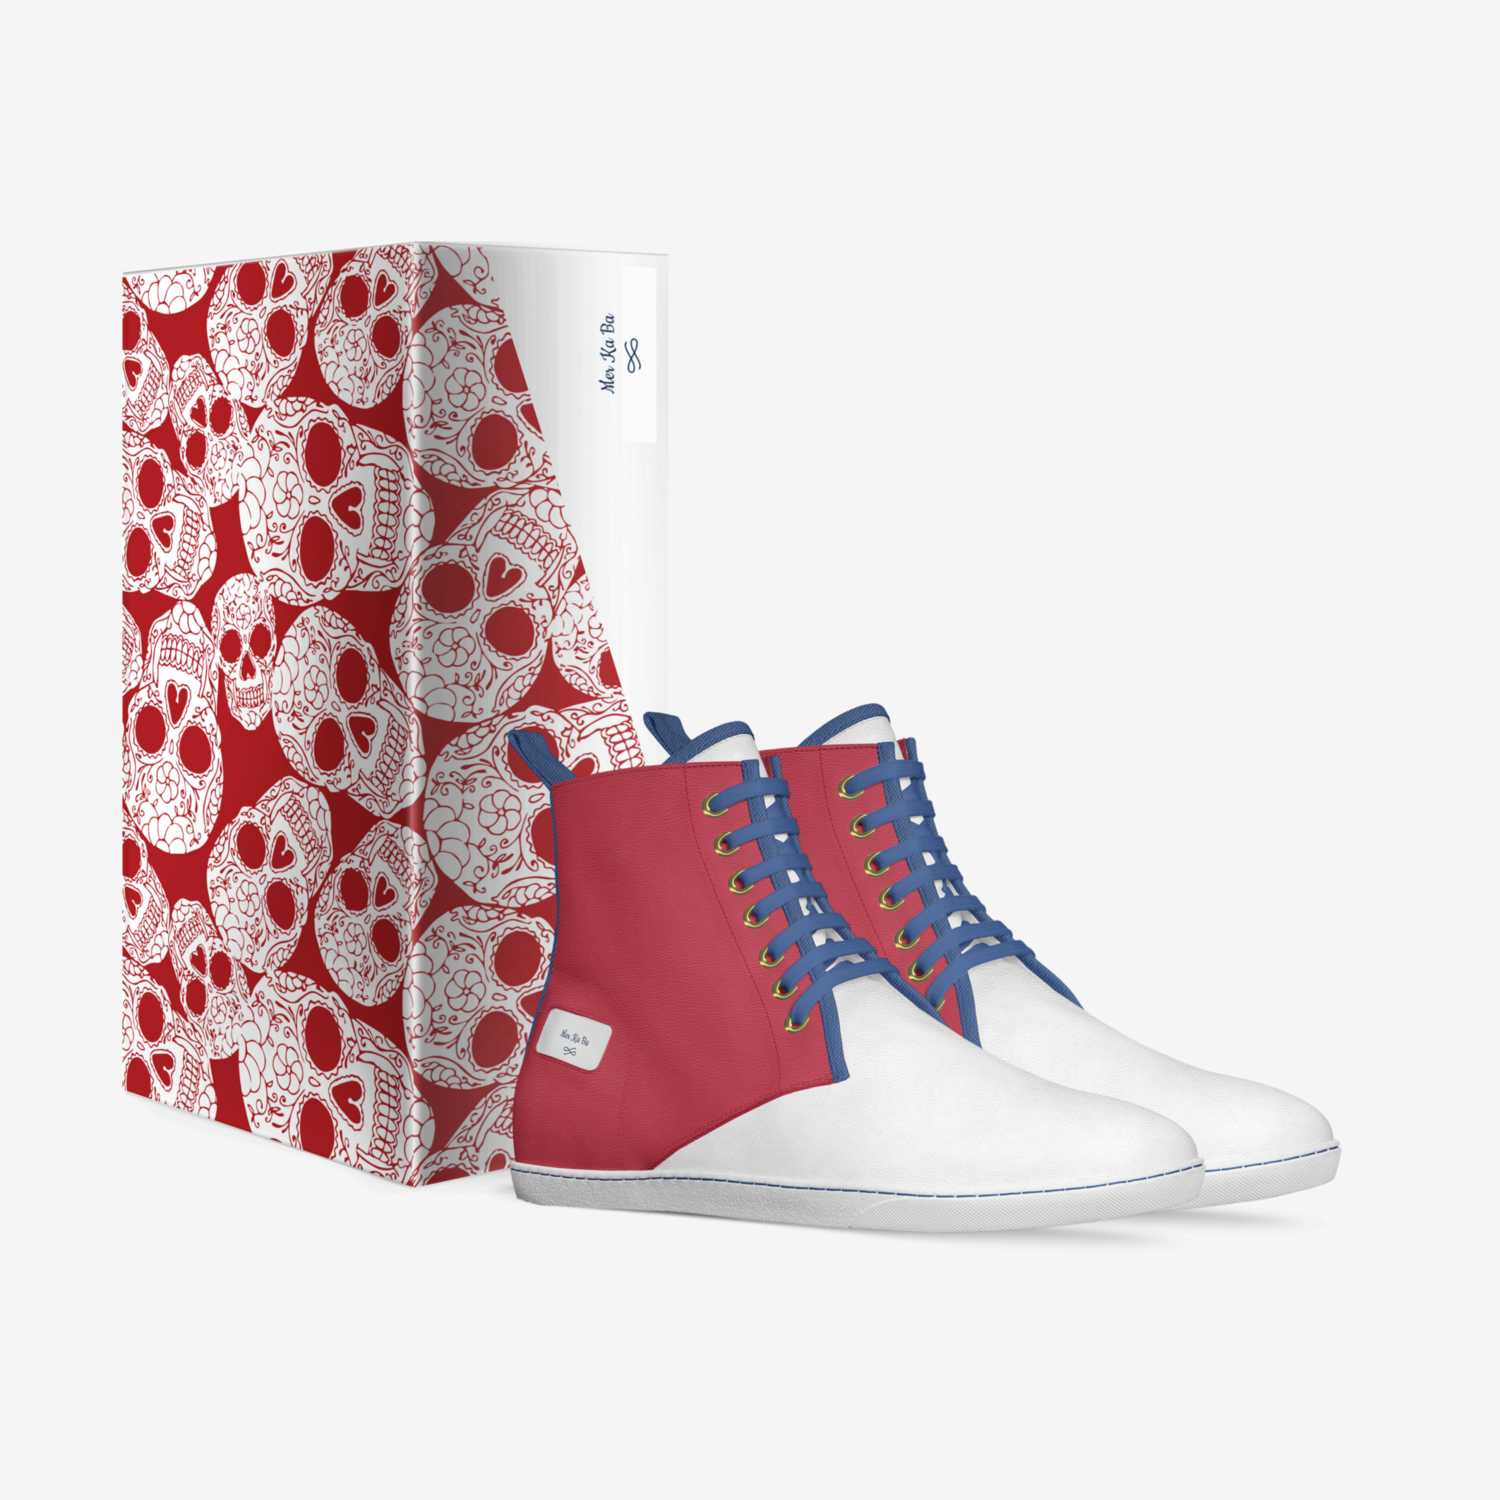 Mer Ka Ba custom made in Italy shoes by Ramar Palms | Box view